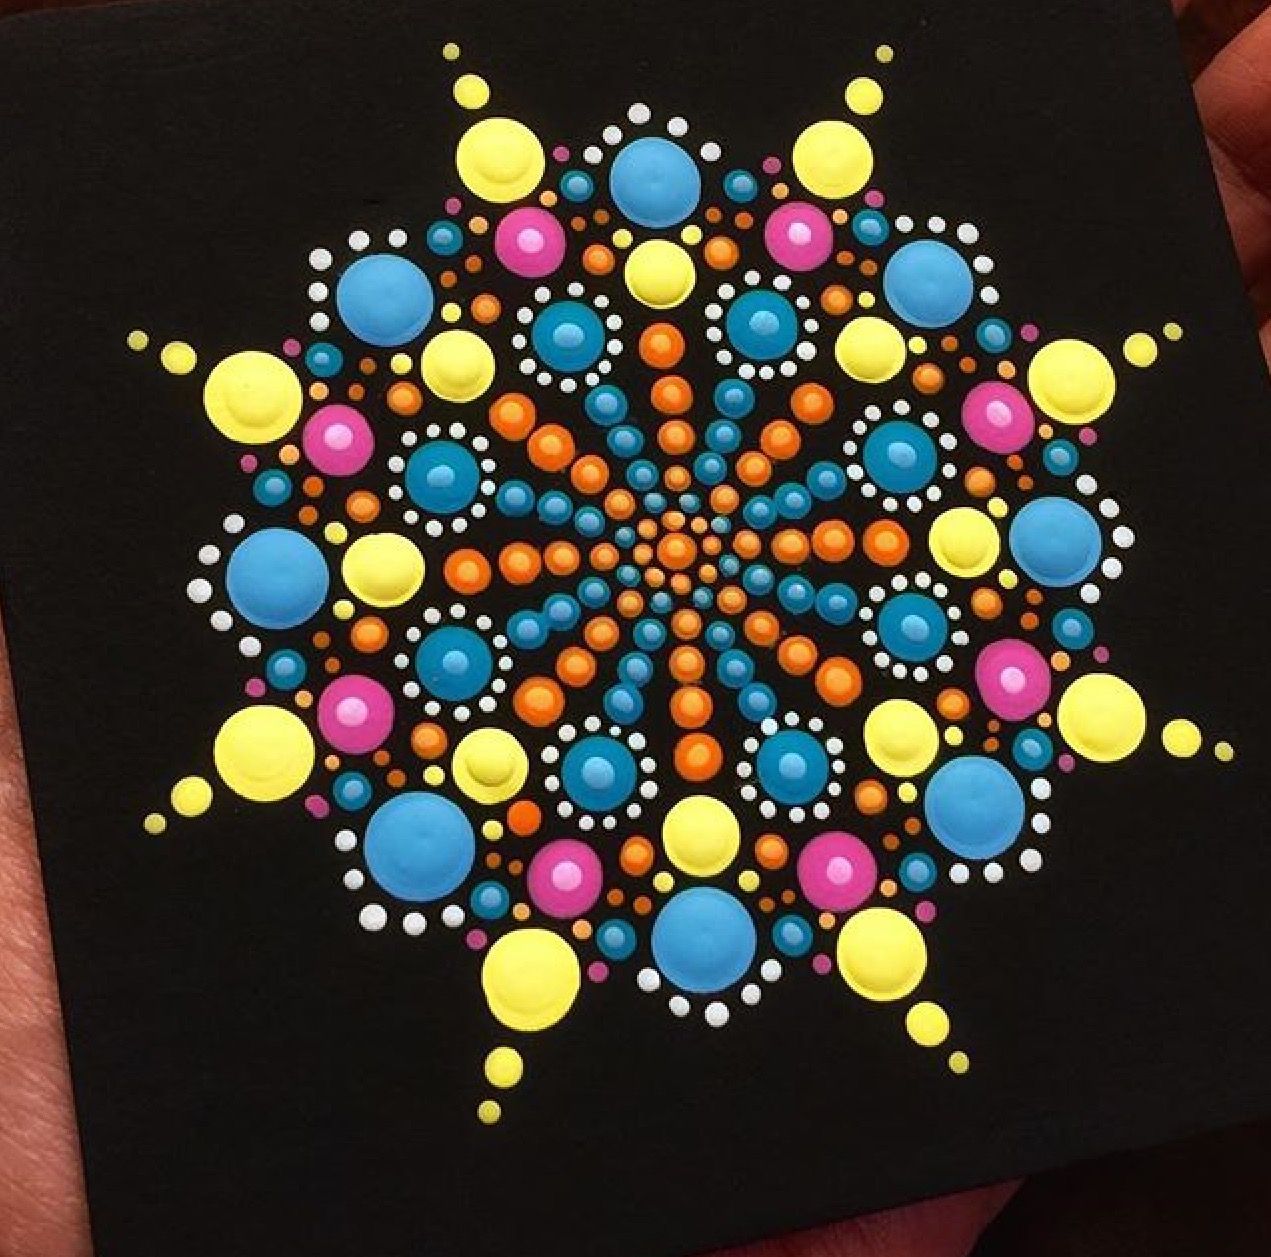 Dot mandala - dot painting